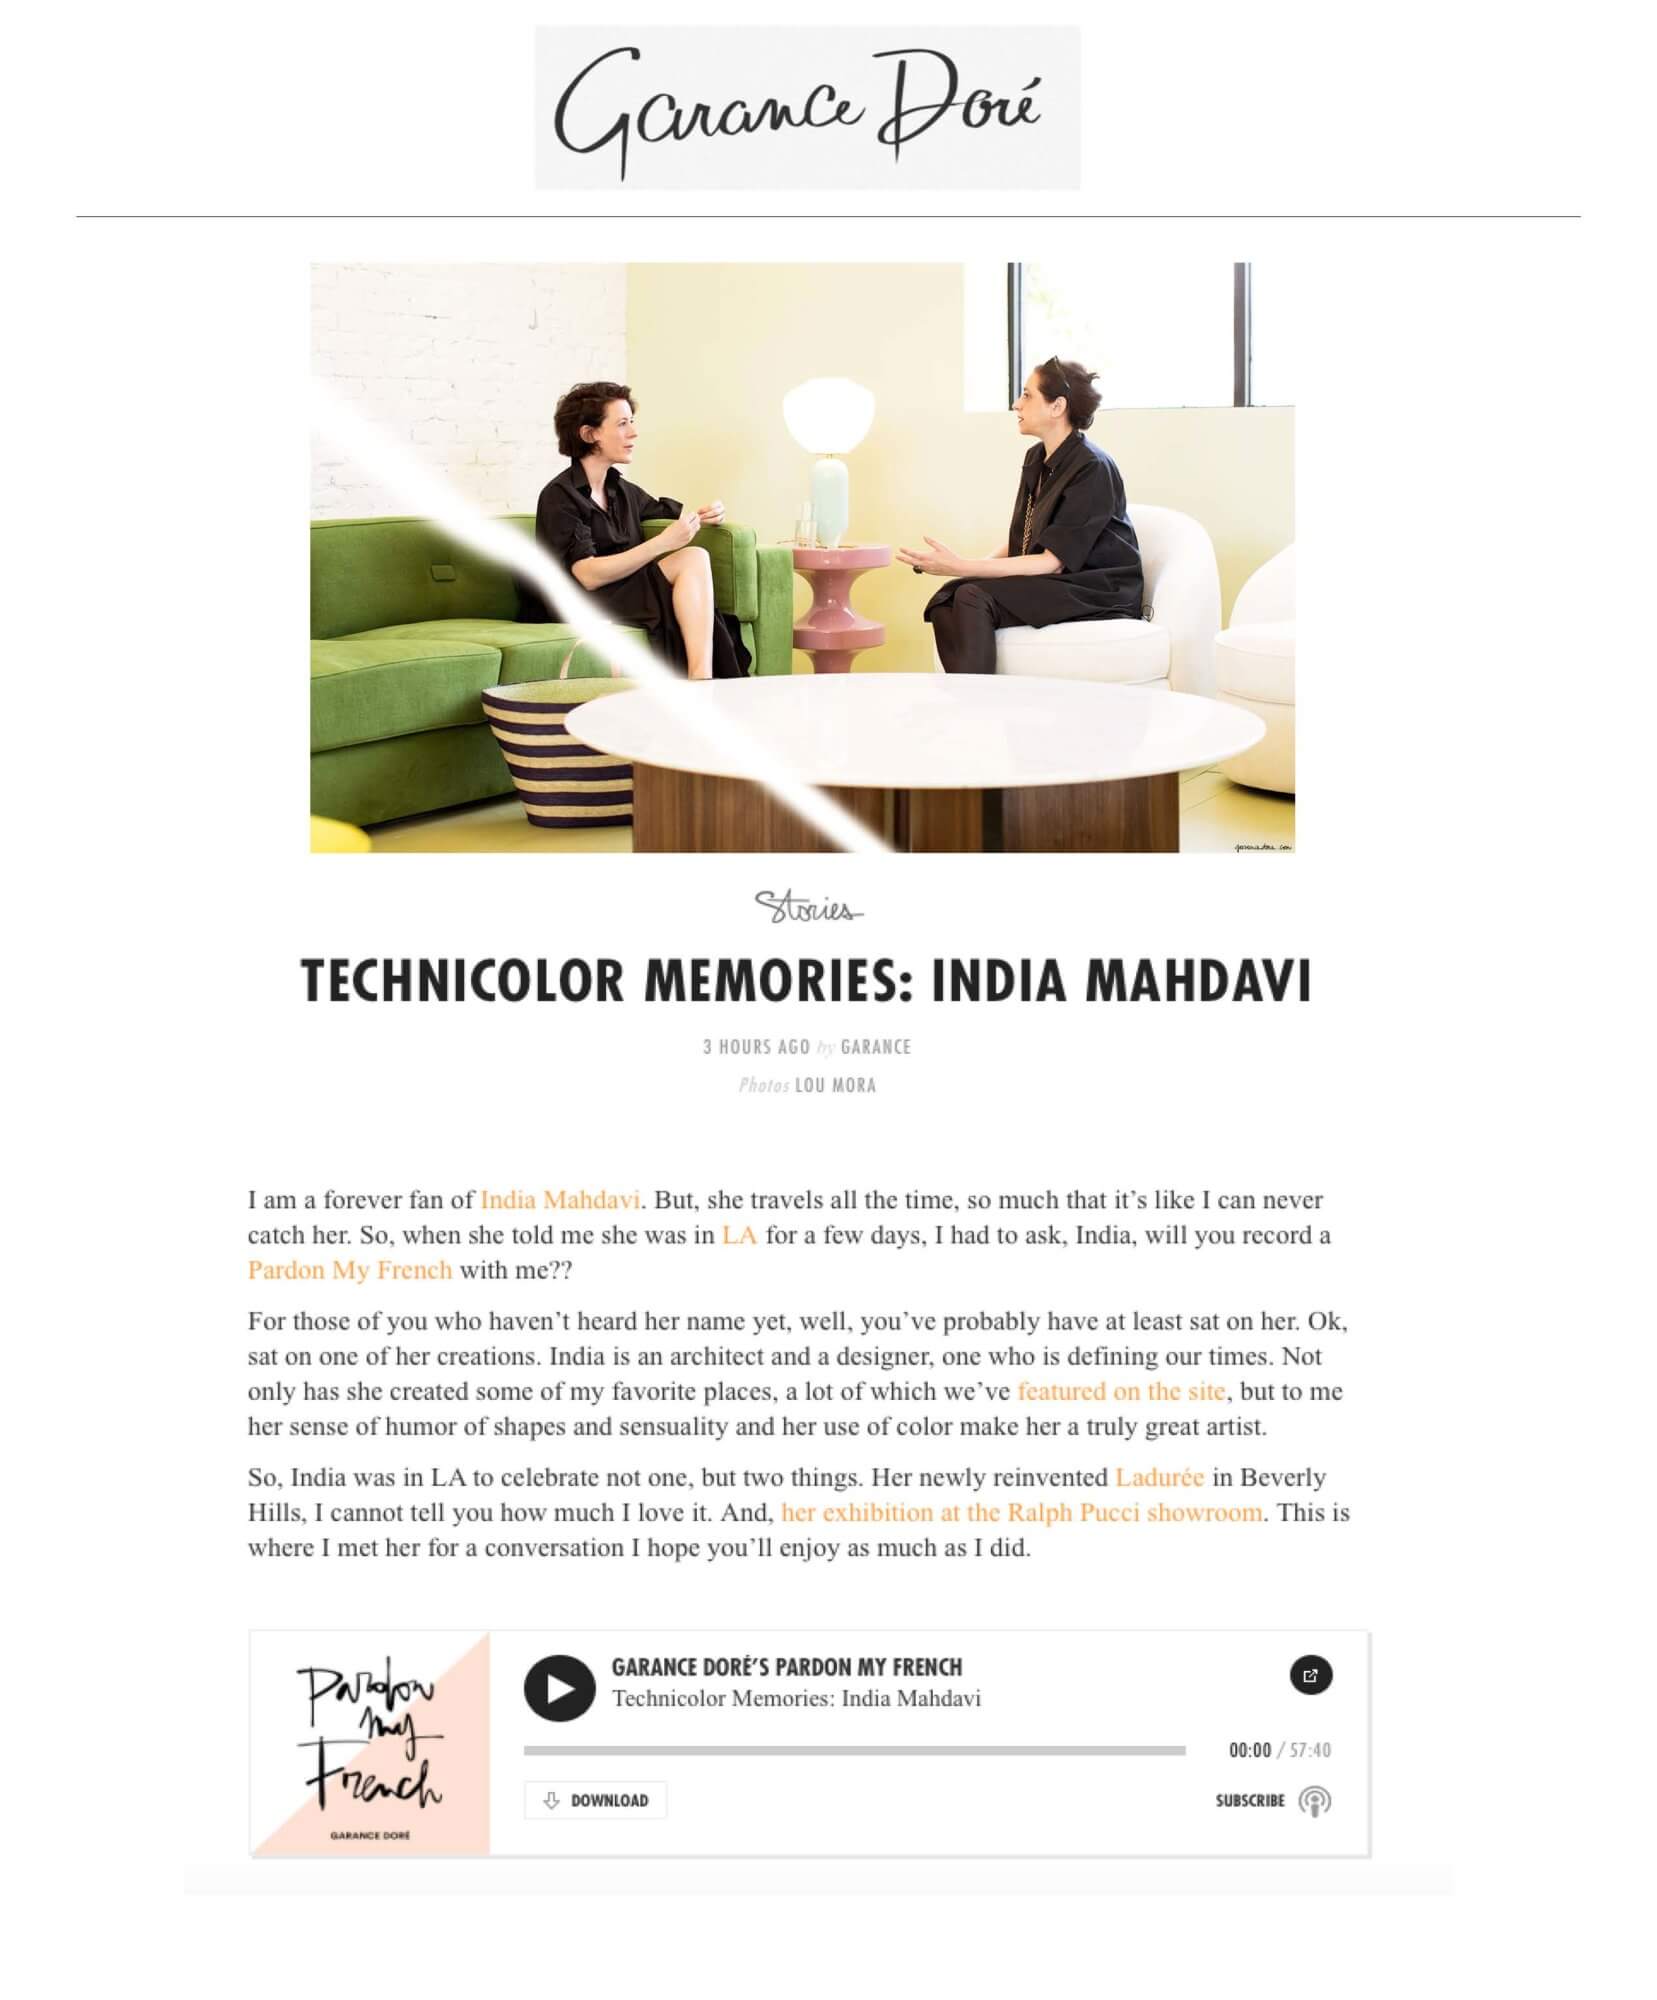 Technicolors memories: India Mahdavi - India Mahdavi